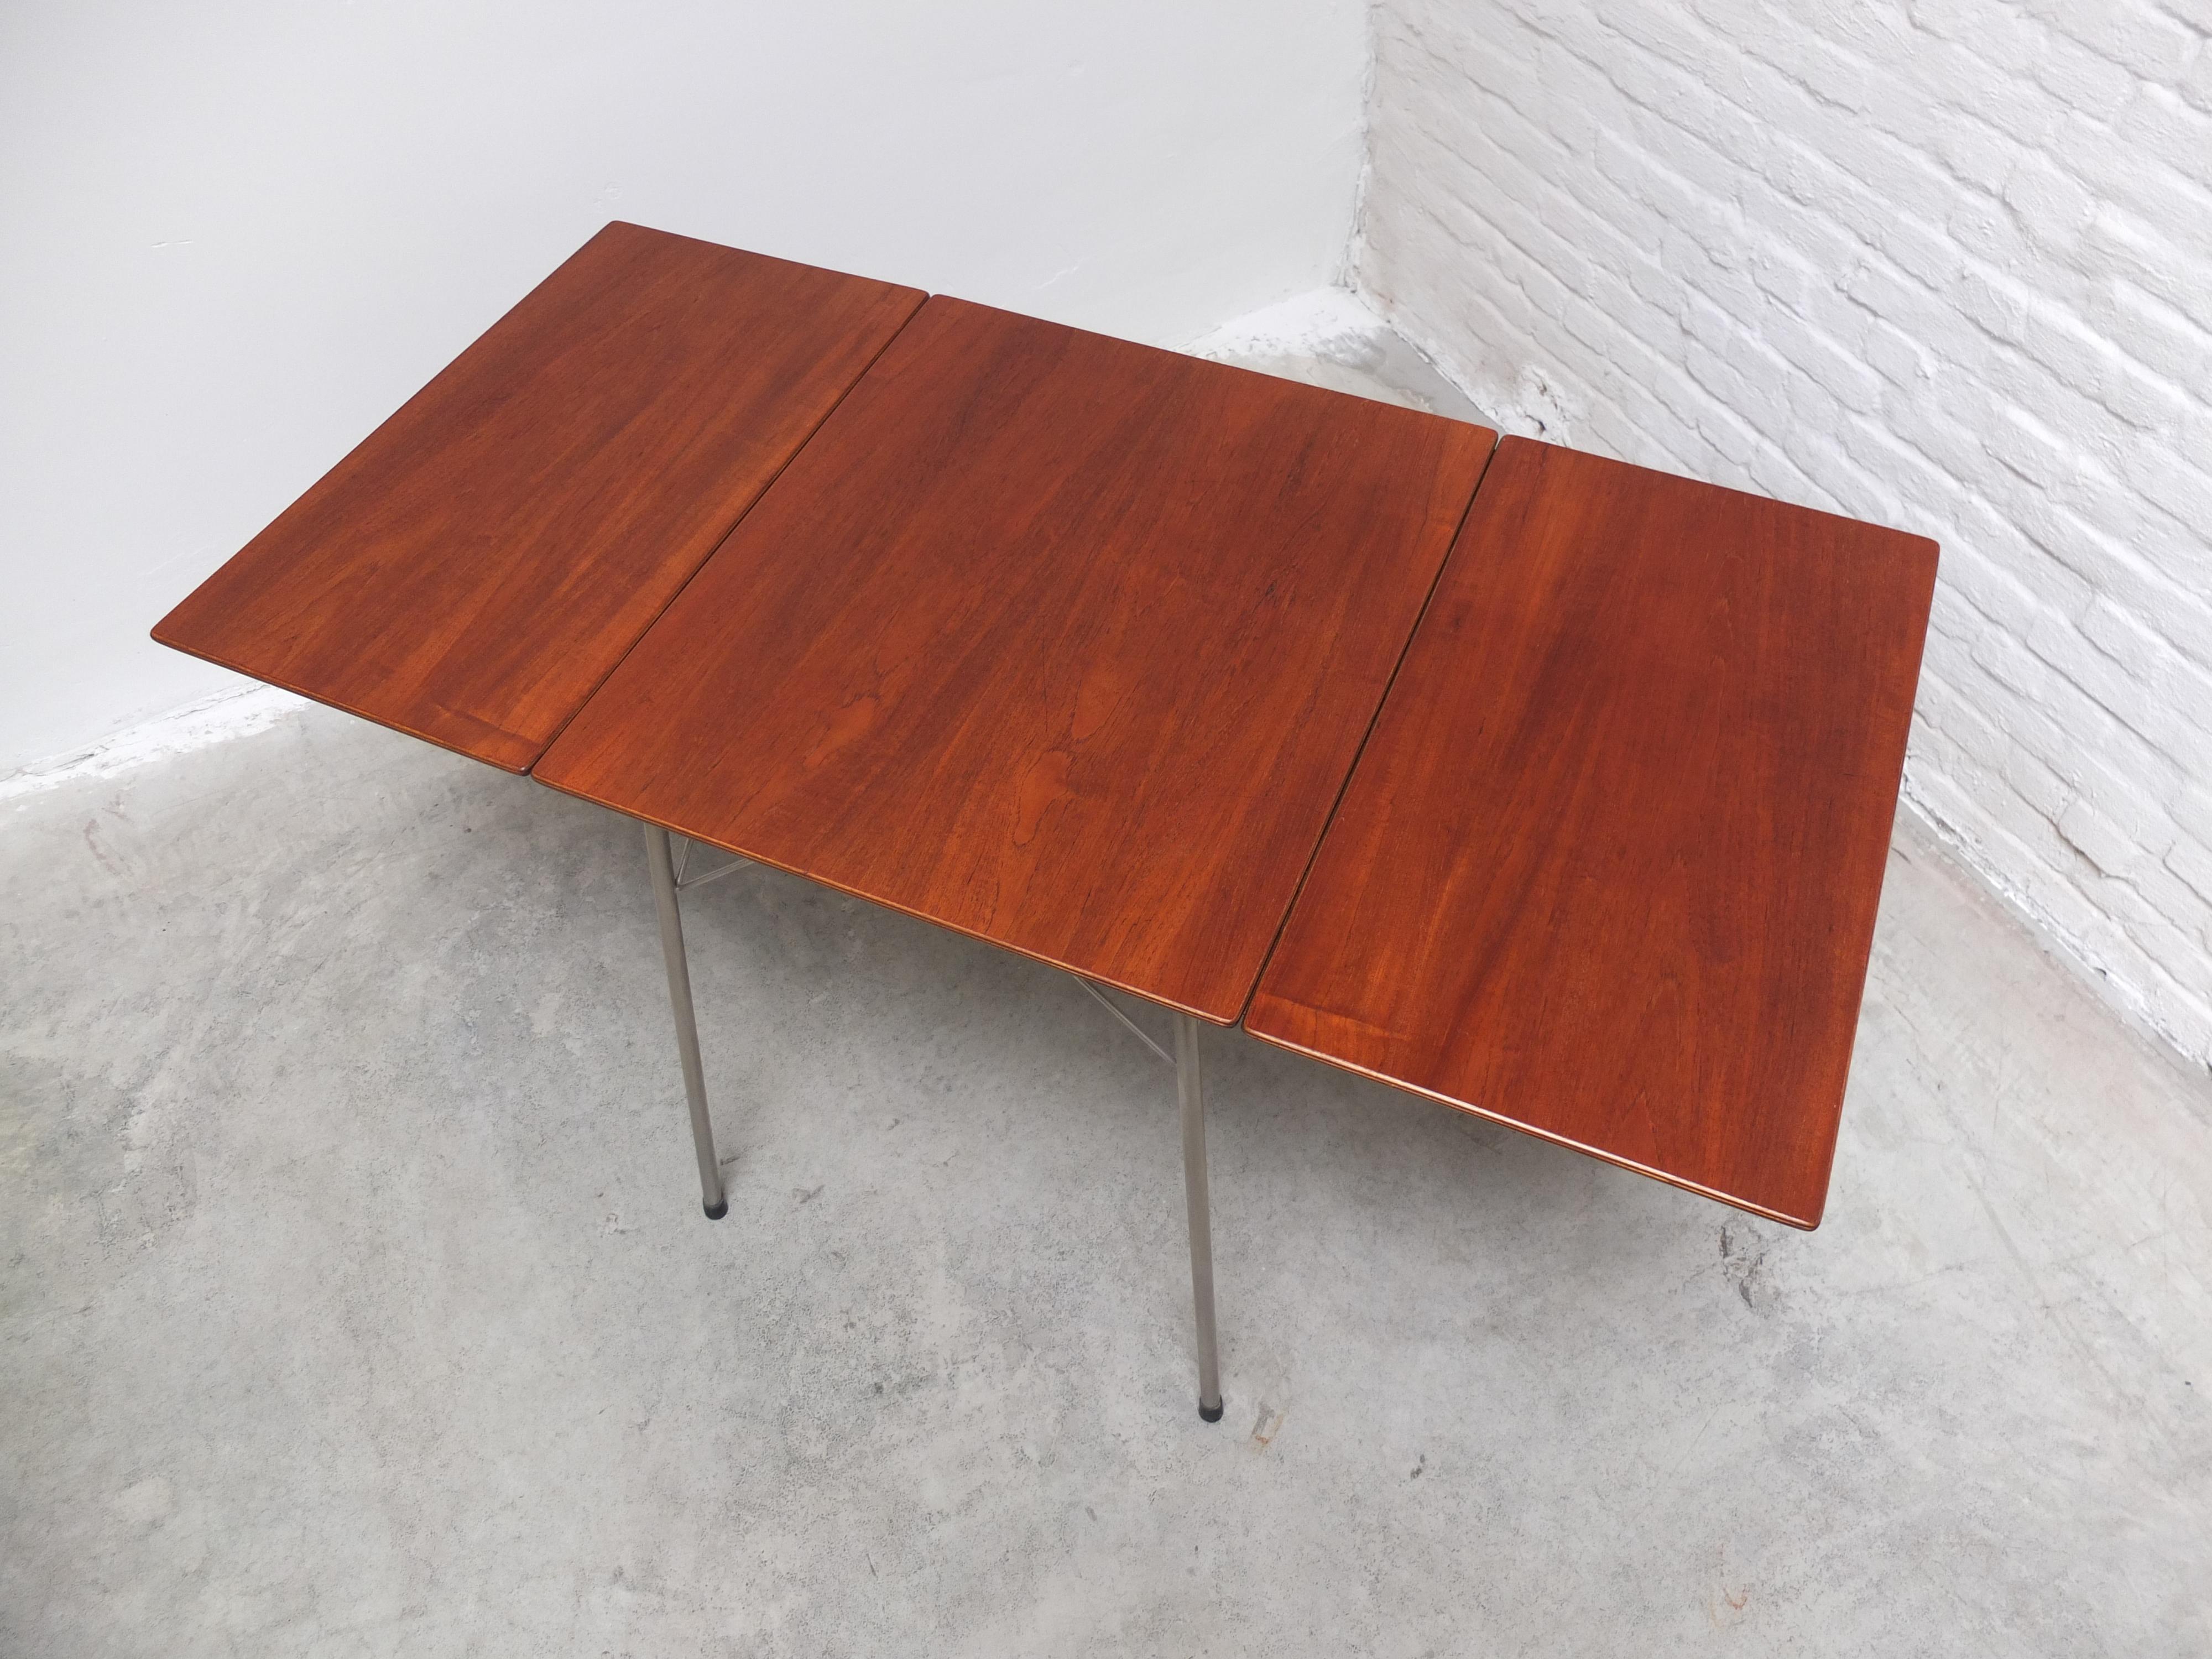 20th Century Rare Model '3601' Drop-Leaf Table by Arne Jacobsen for Fritz Hansen, 1950s